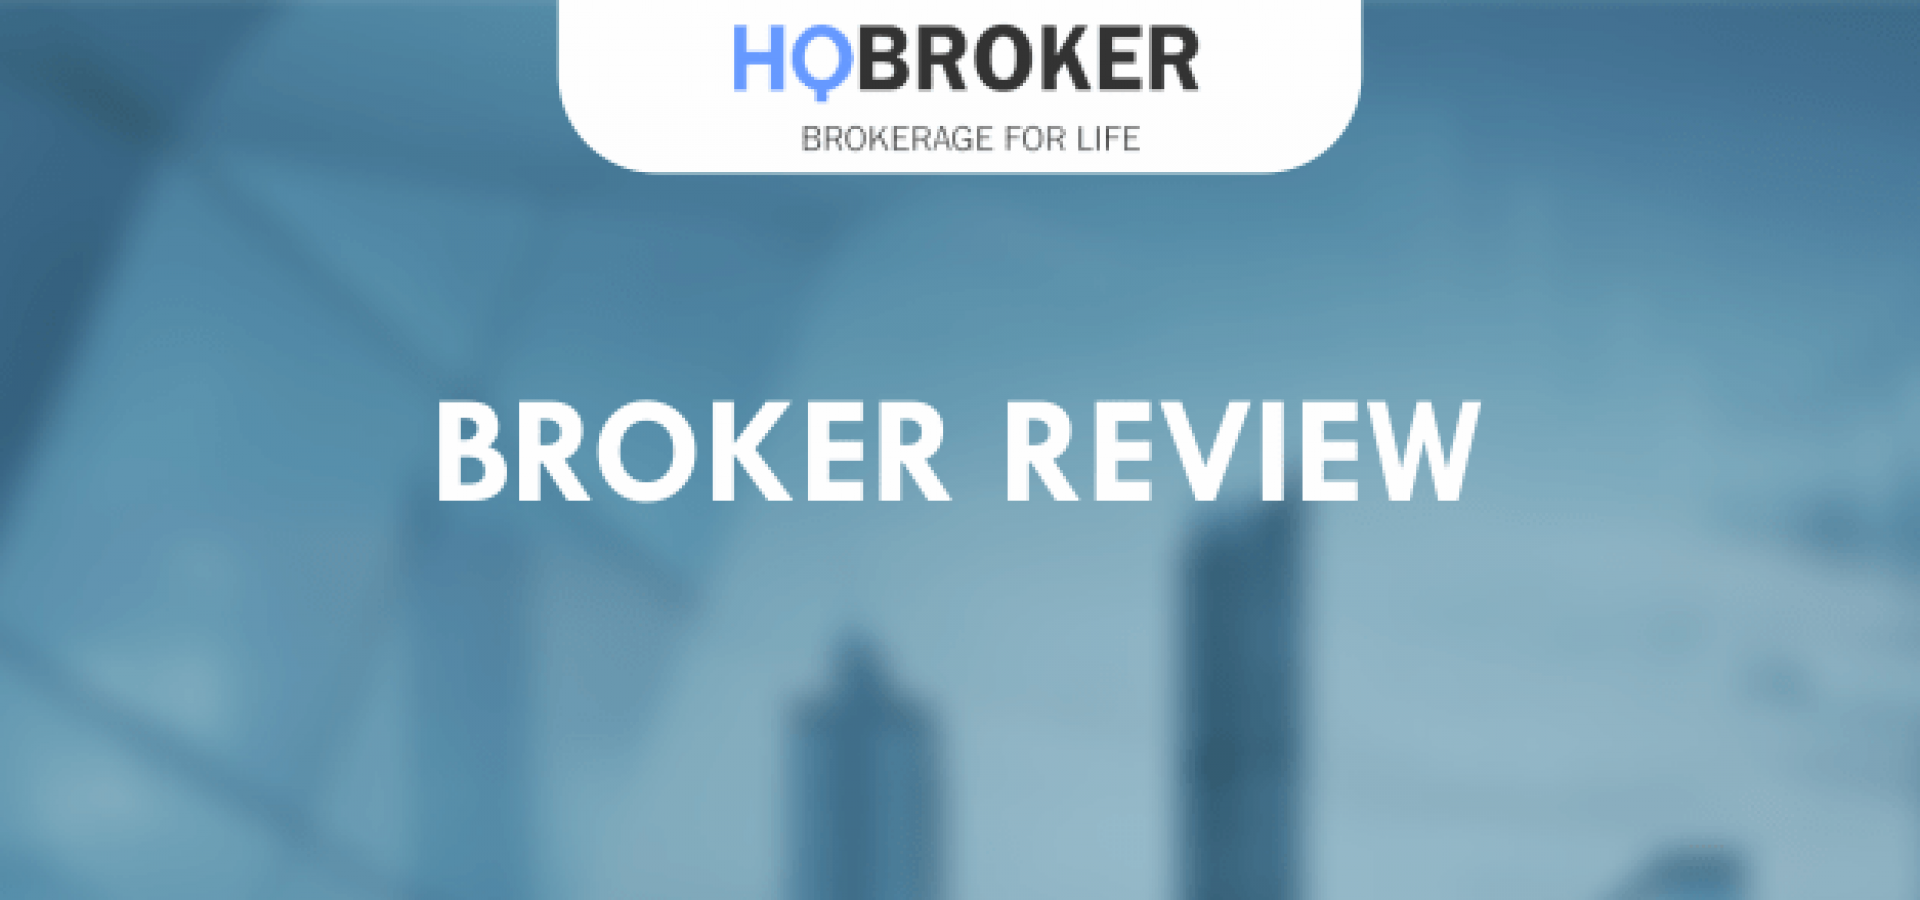 HQBroker Broker Review